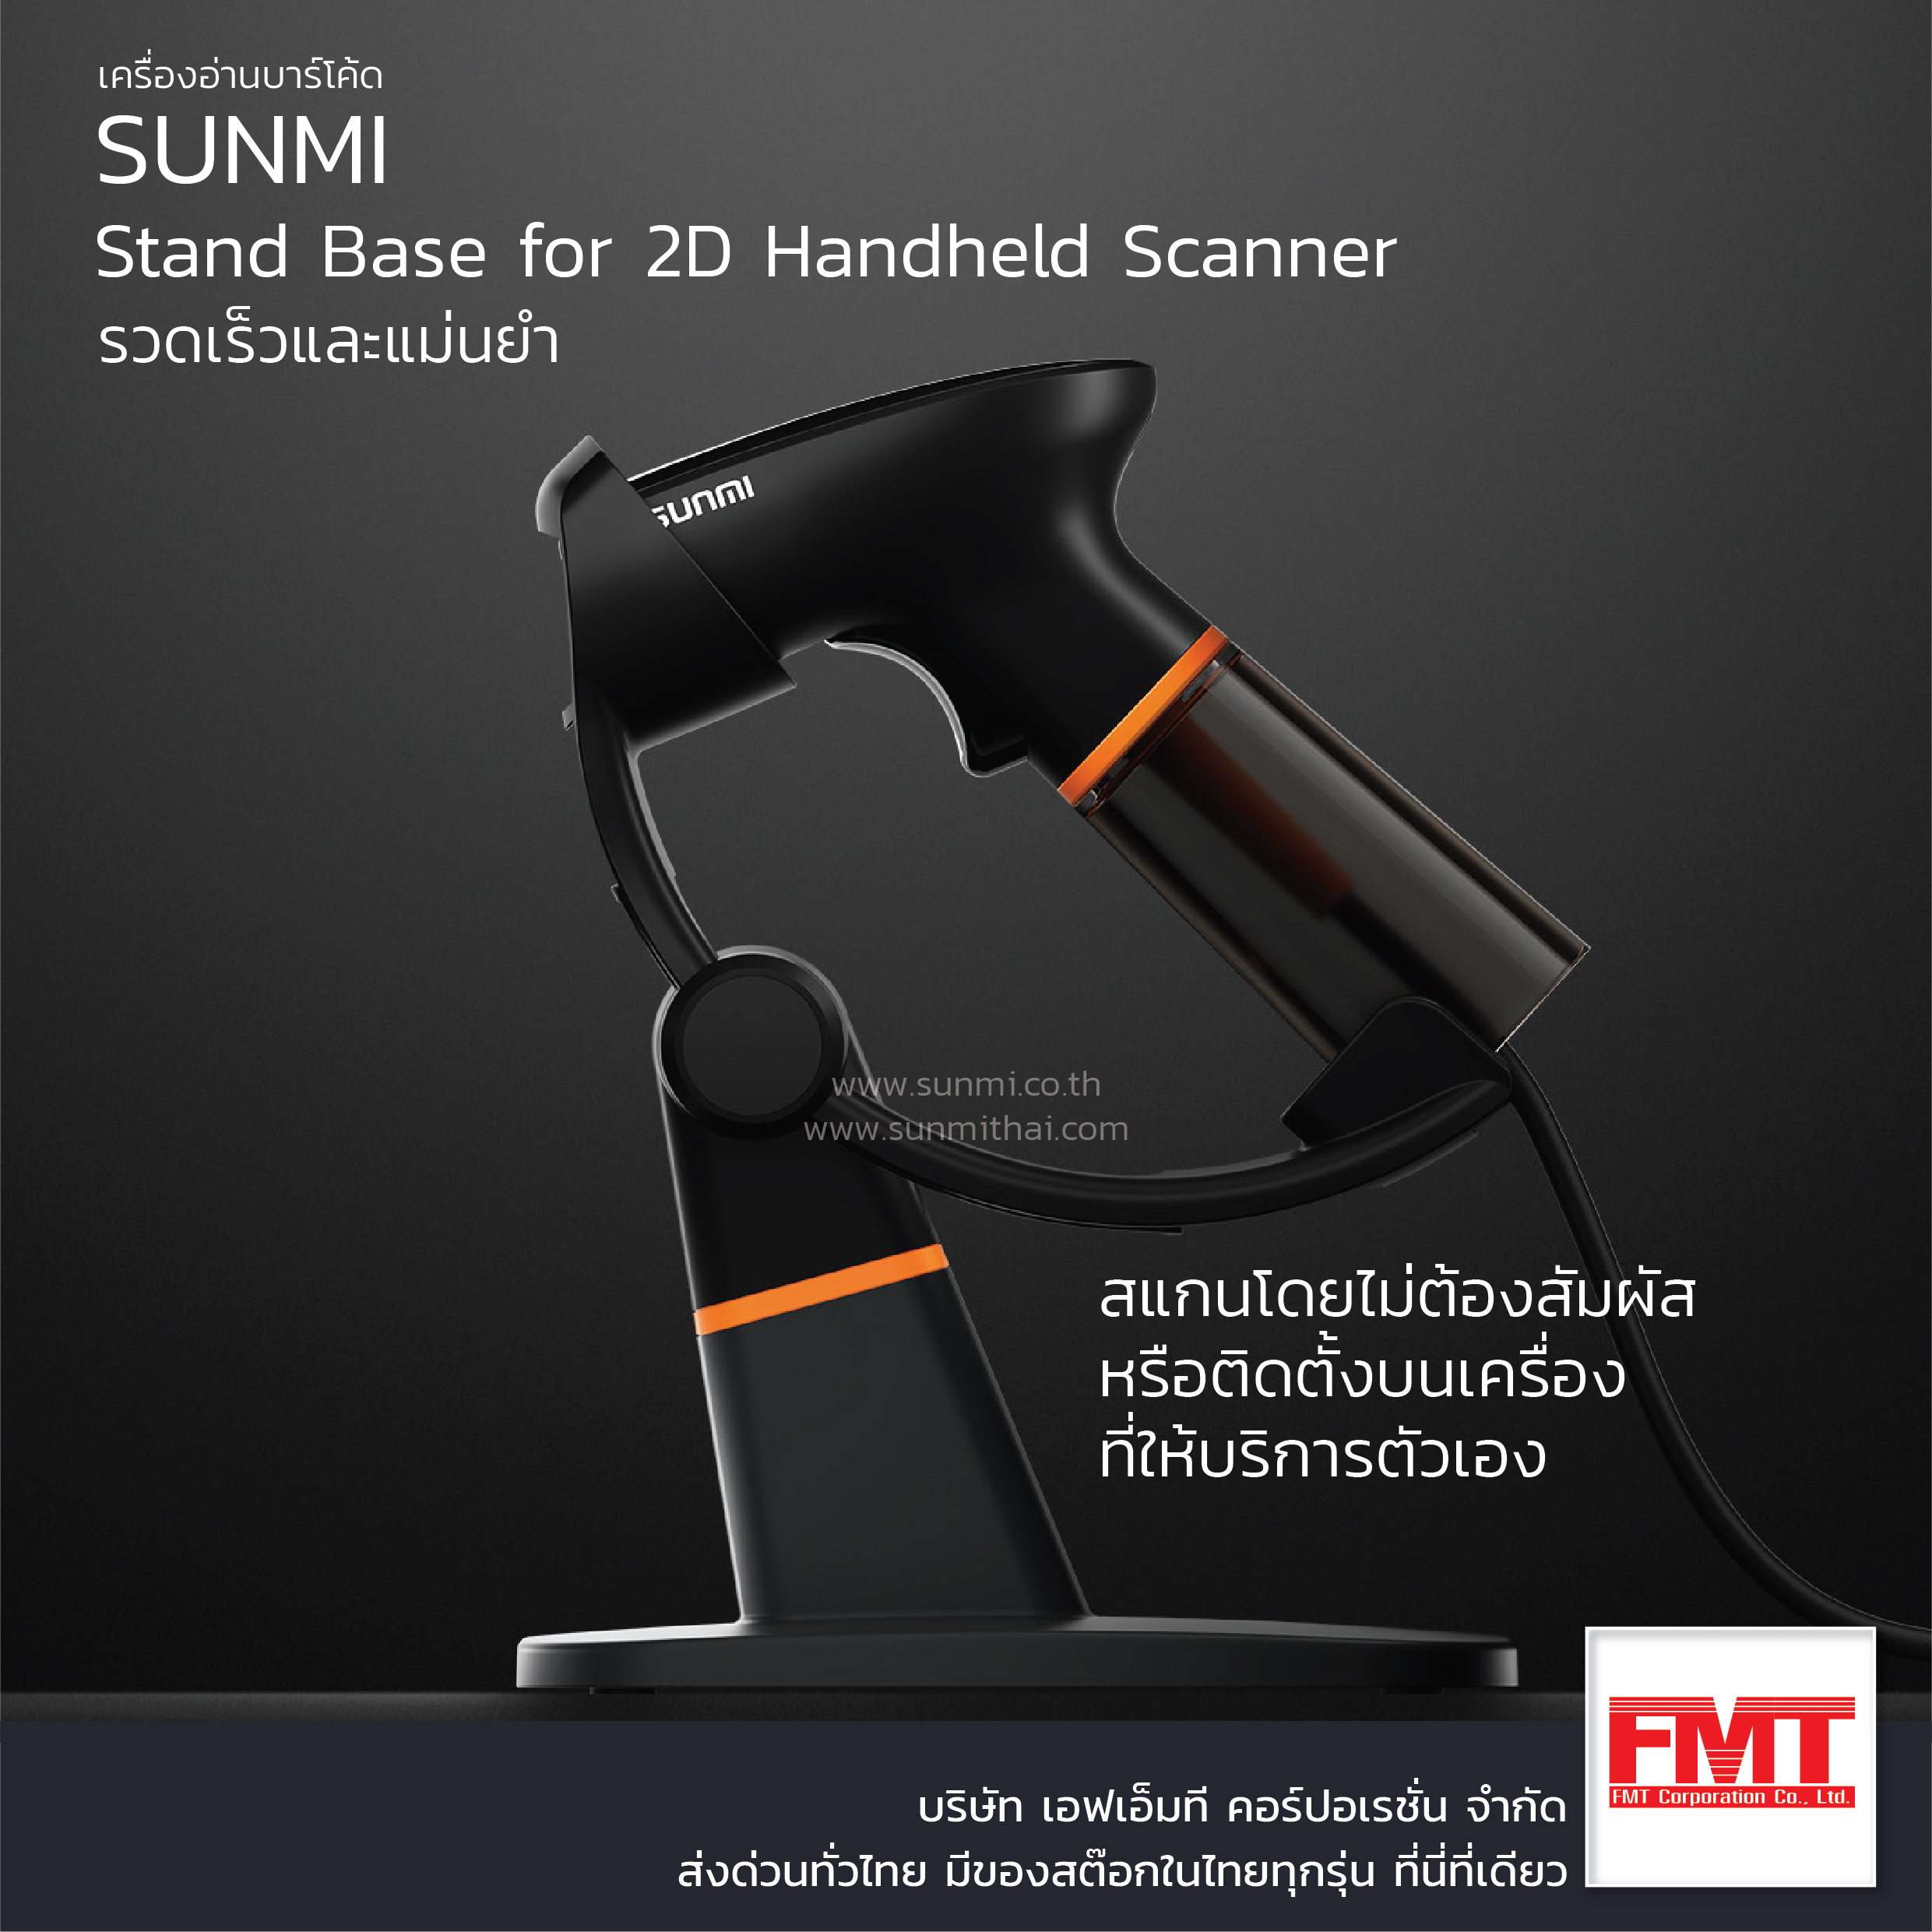 SUNMI Handheld Scanner